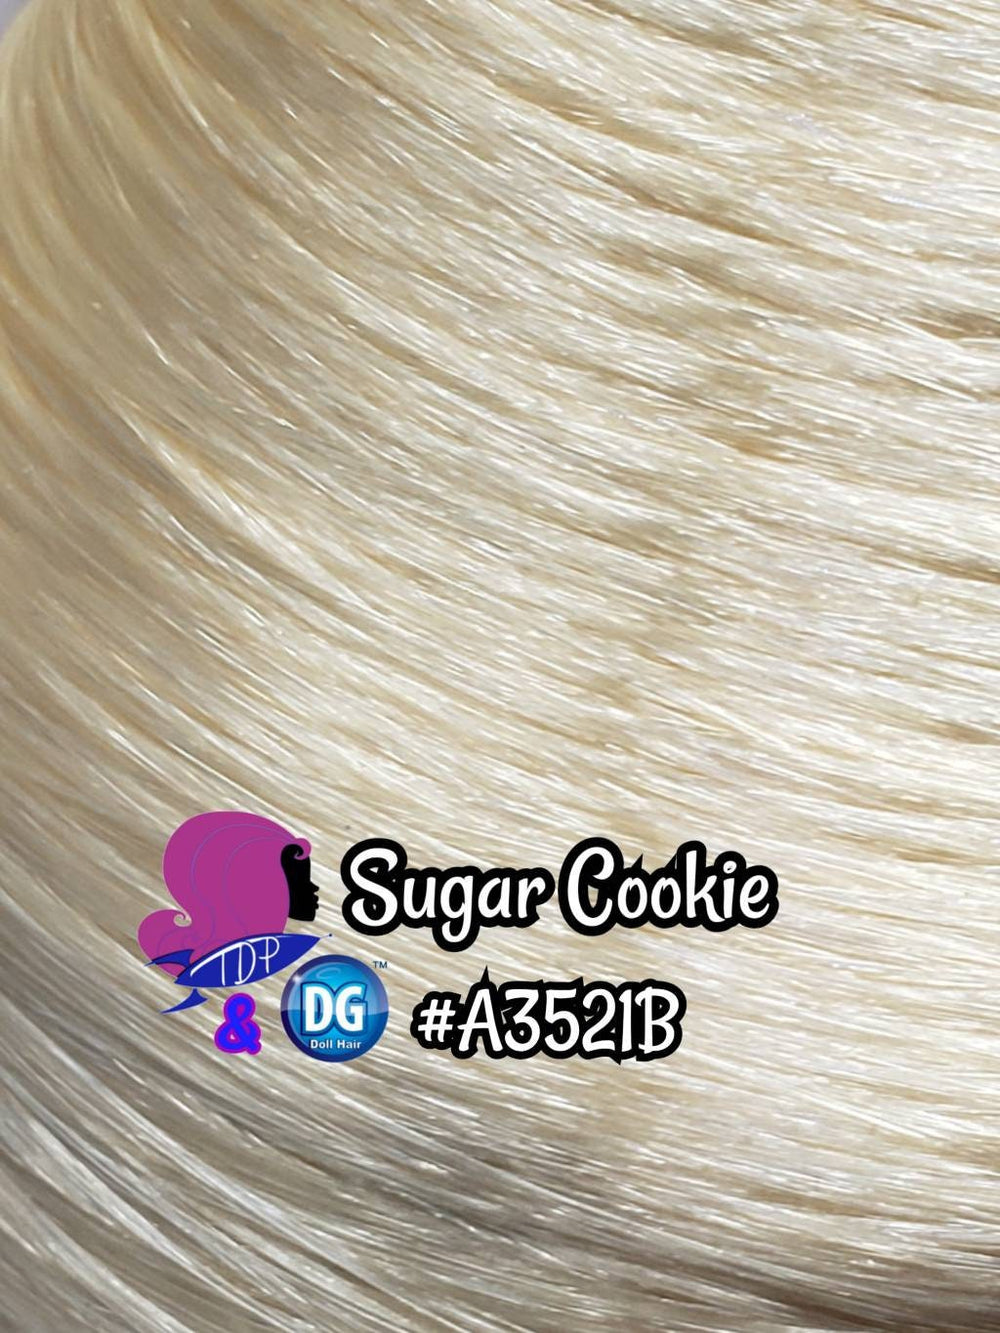 DG-HQ™ Nylon metallic shimmer Sugar Cookie #A3512B light pale blonde Doll Hair Rerooting My Little Pony Barbie™ Monster High™ Rainbow High®